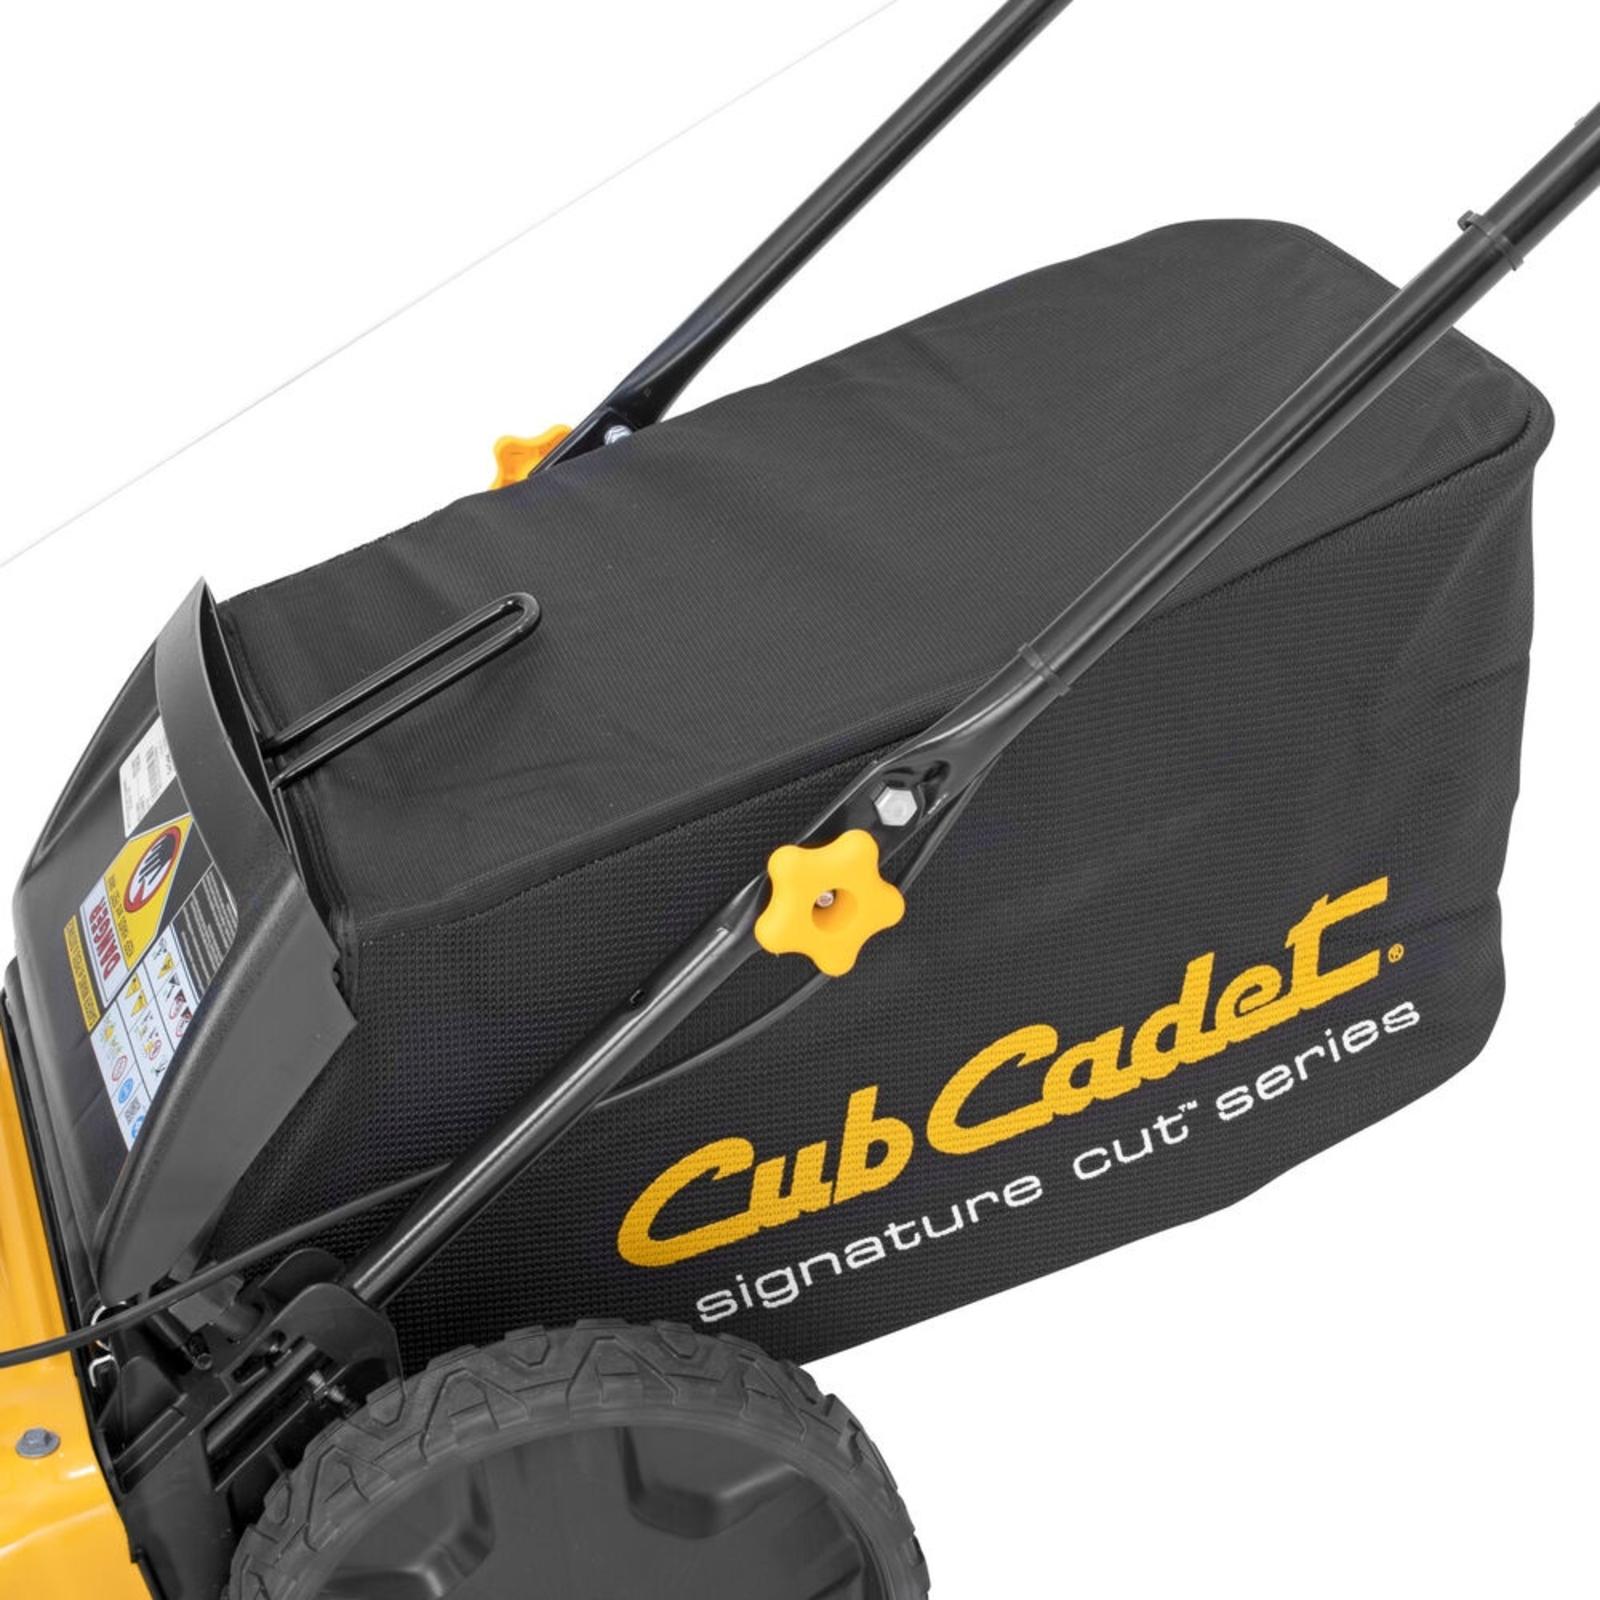 Cub Cadet Signature Cut Push Lawn Mower SCP100